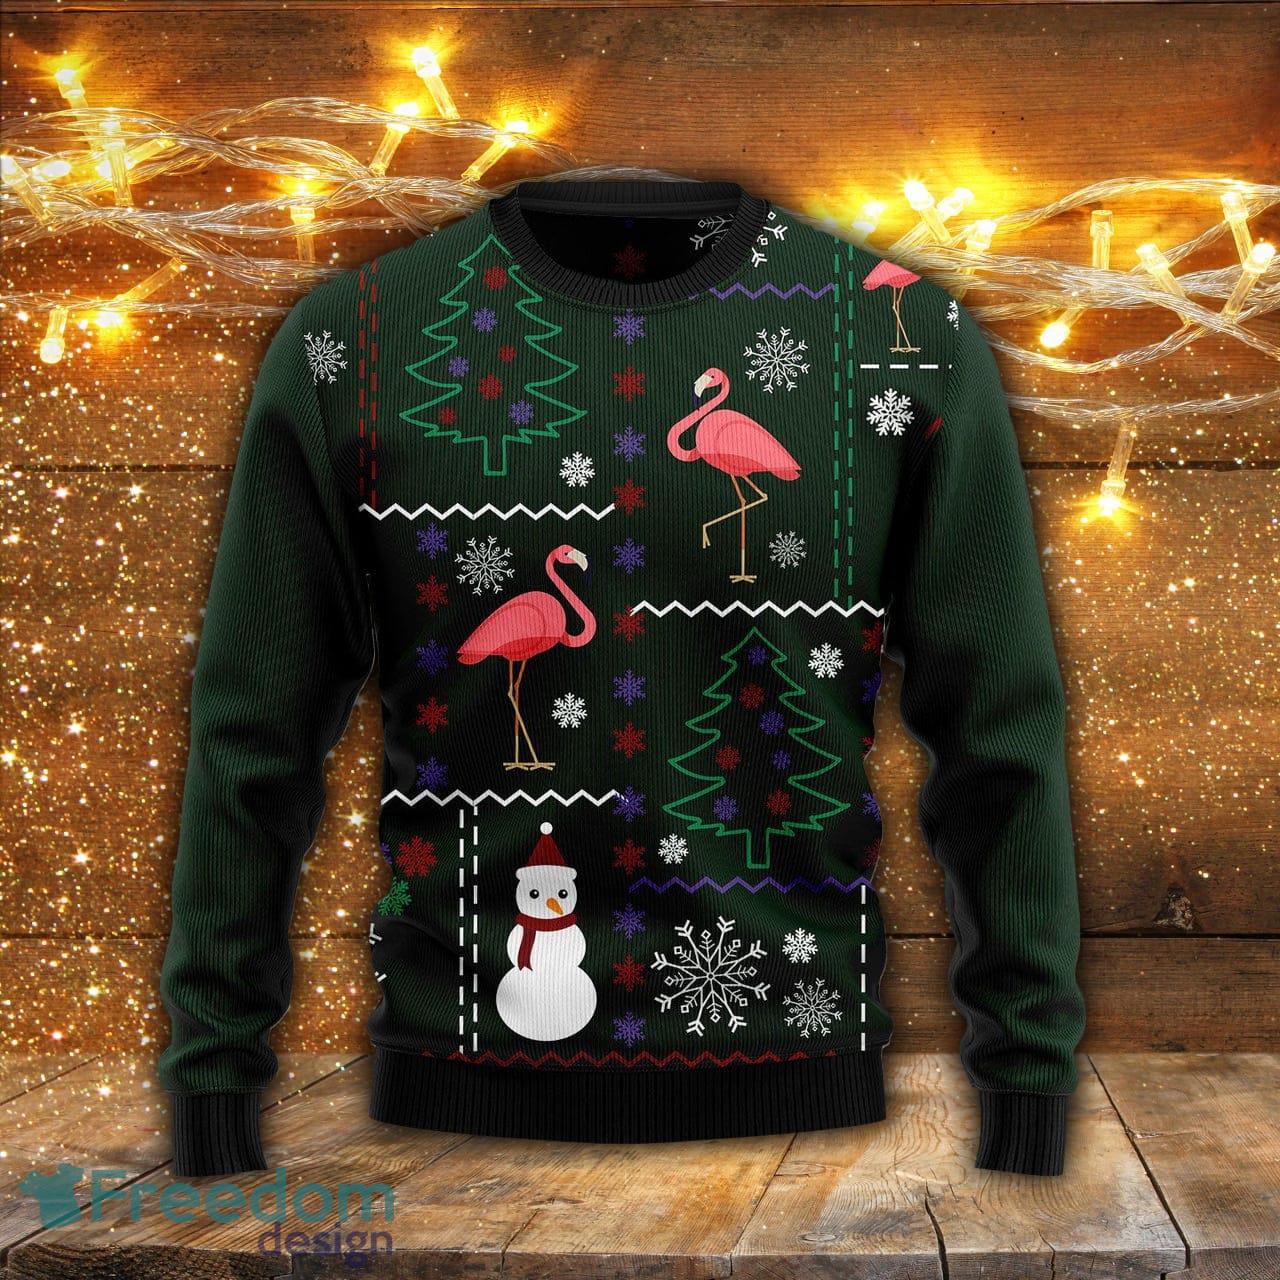 Let S Jingle And Flamingle Ugly Christmas Sweater - Anynee